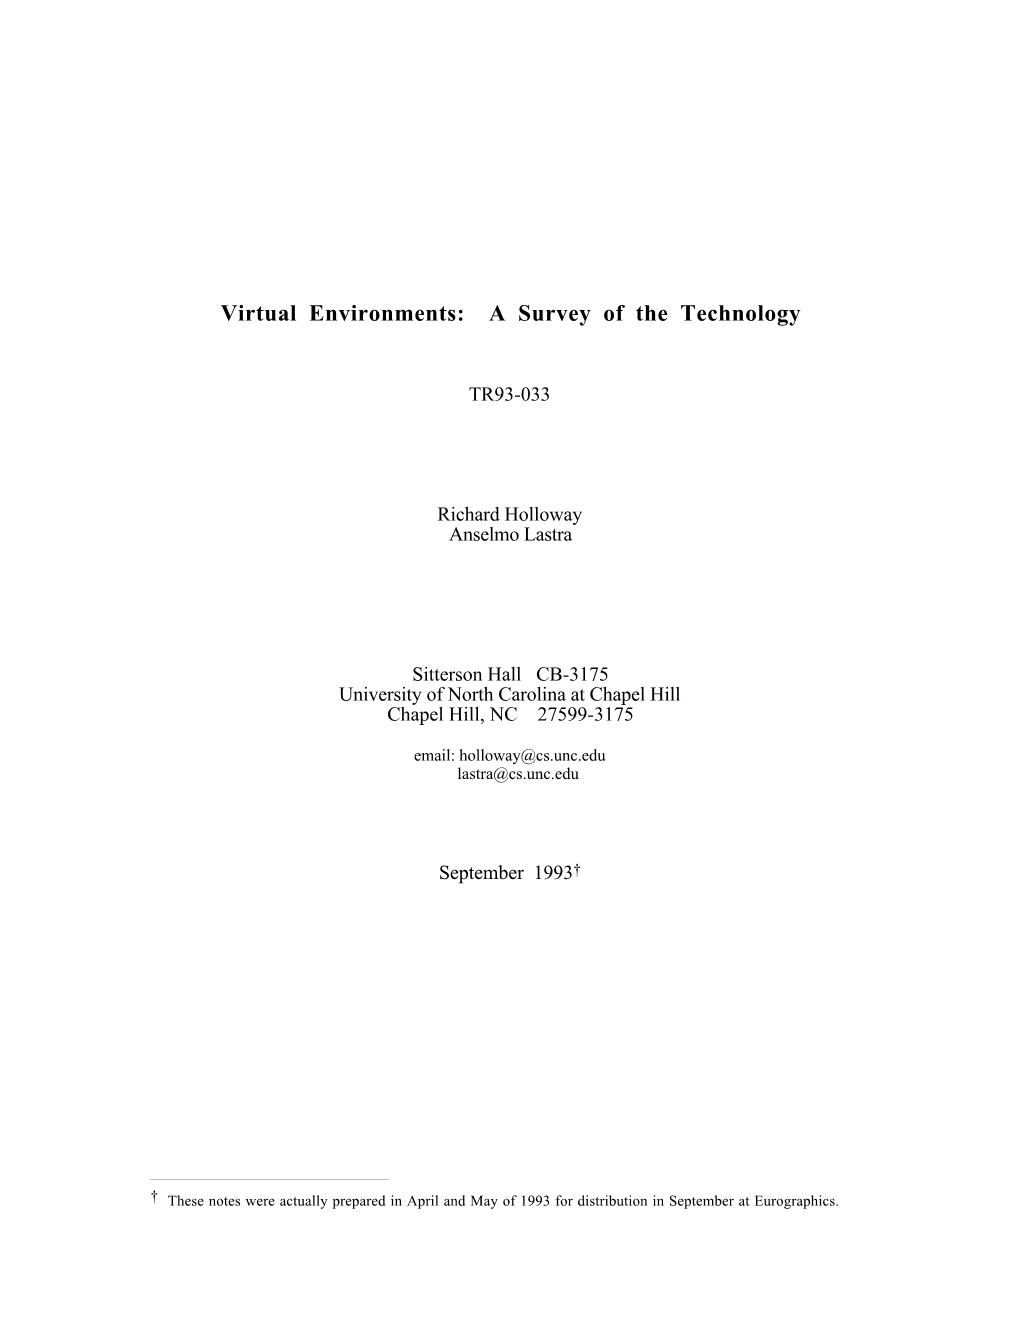 Virtual Environments: a Survey of the Technology